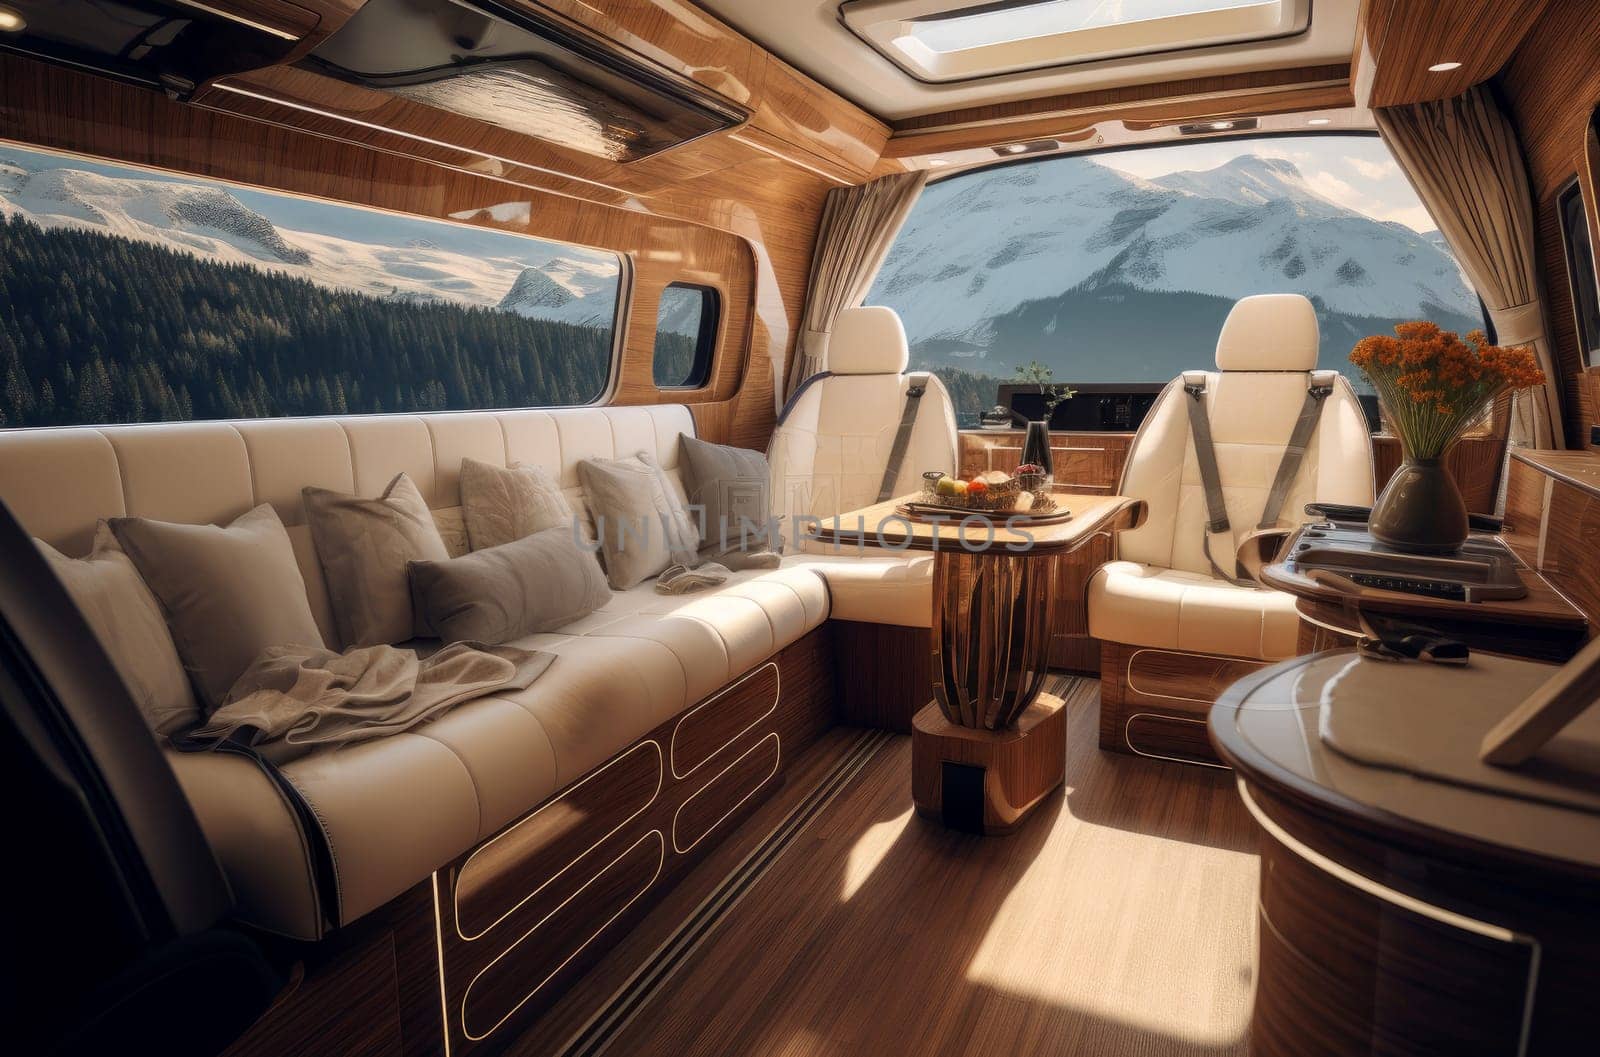 Comfortable Luxury van interior. Generate Ai by ylivdesign